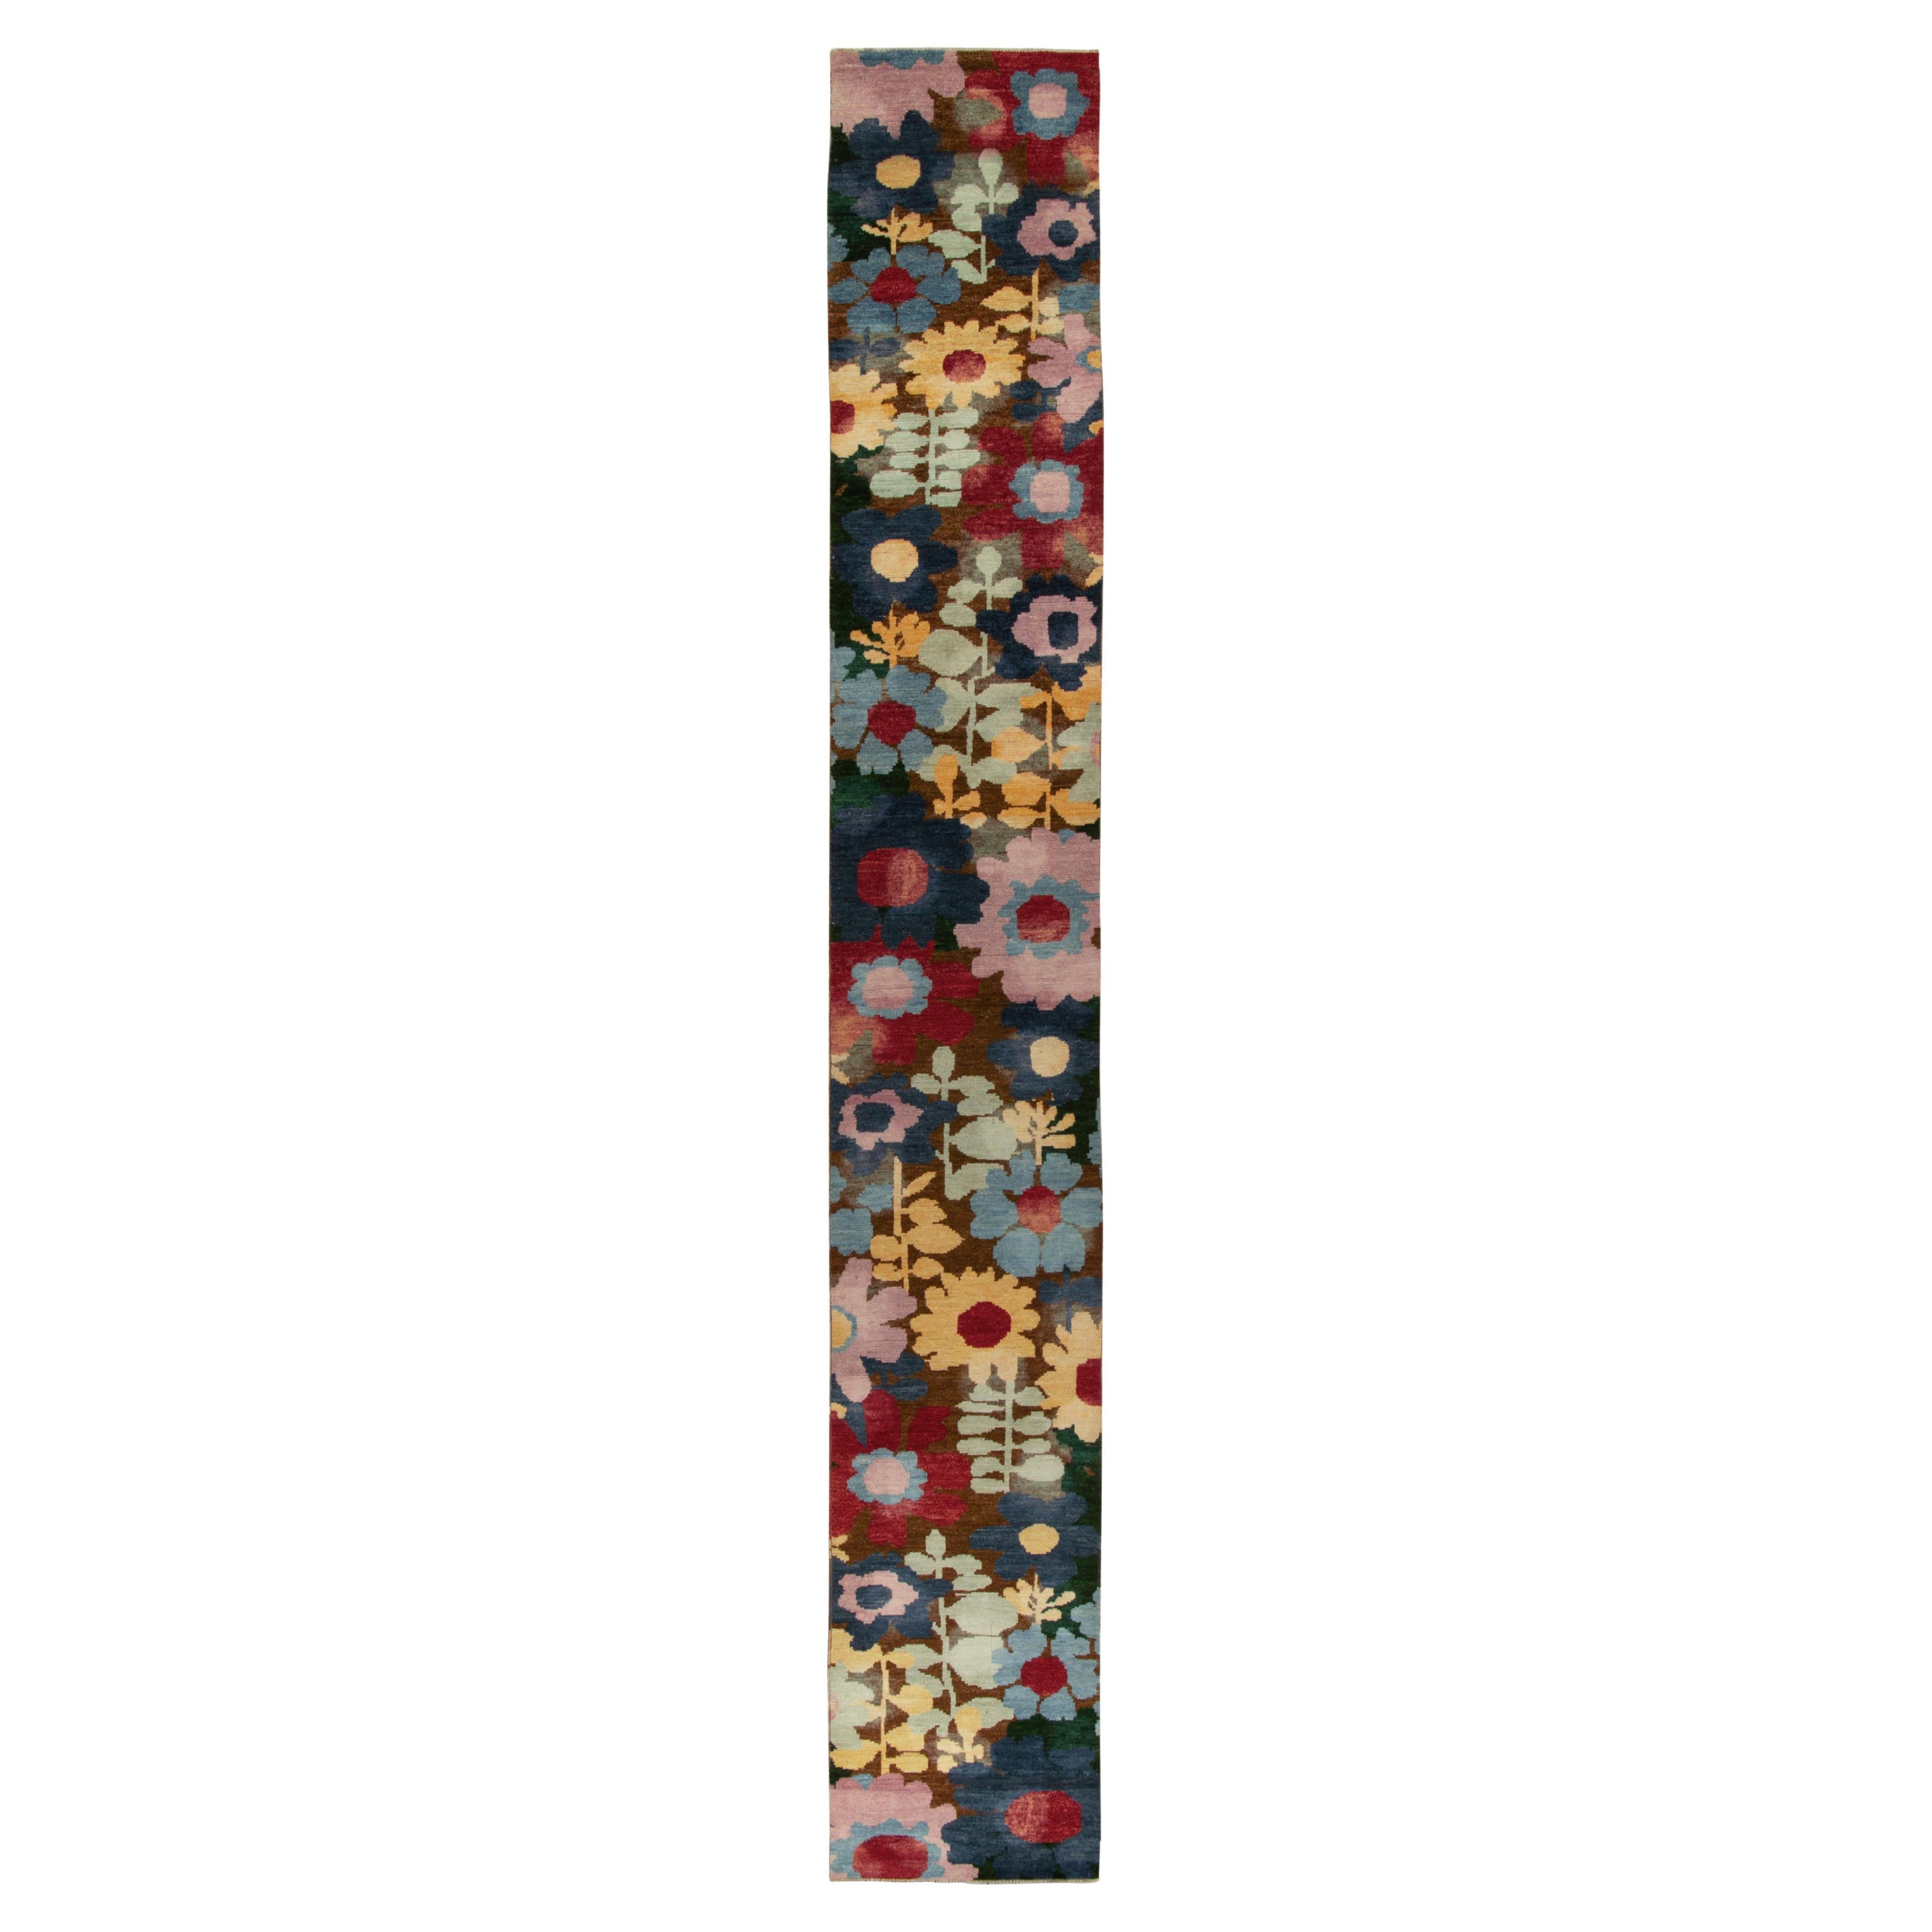 Tapis & Kilim's Contemporary Runner in Multicolor Floral Pattern (Tapis de course contemporain à motif floral multicolore)